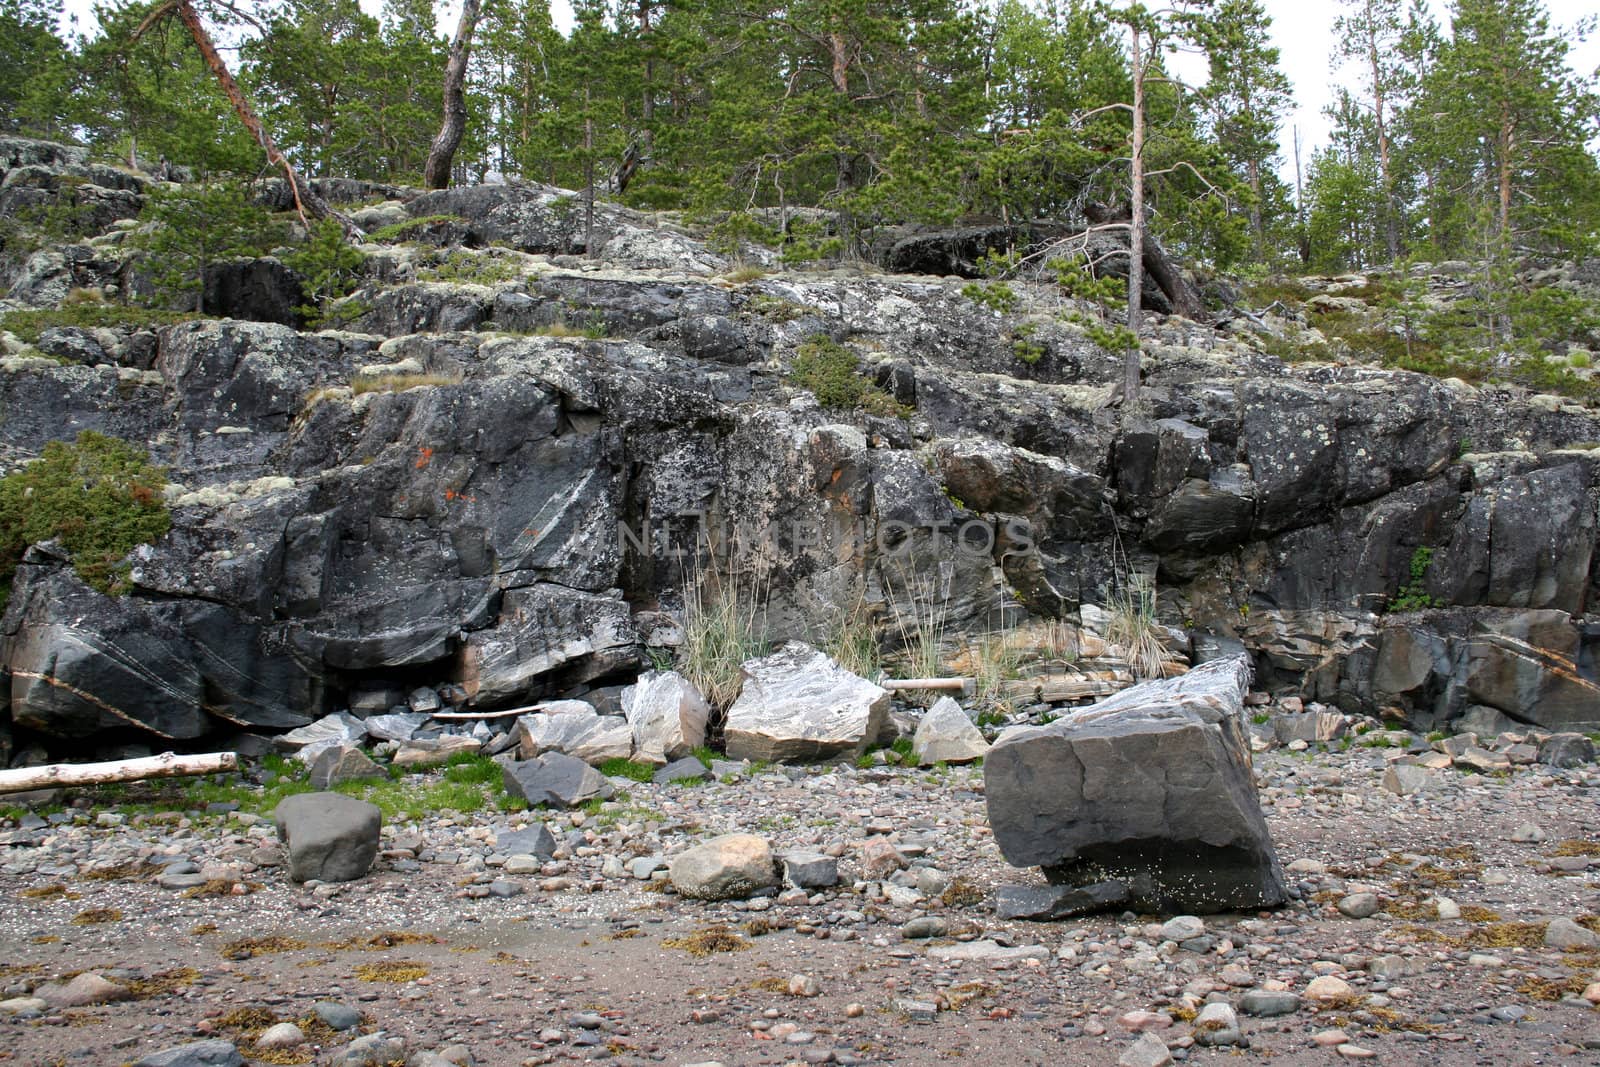 north: stones, trees and rocks
